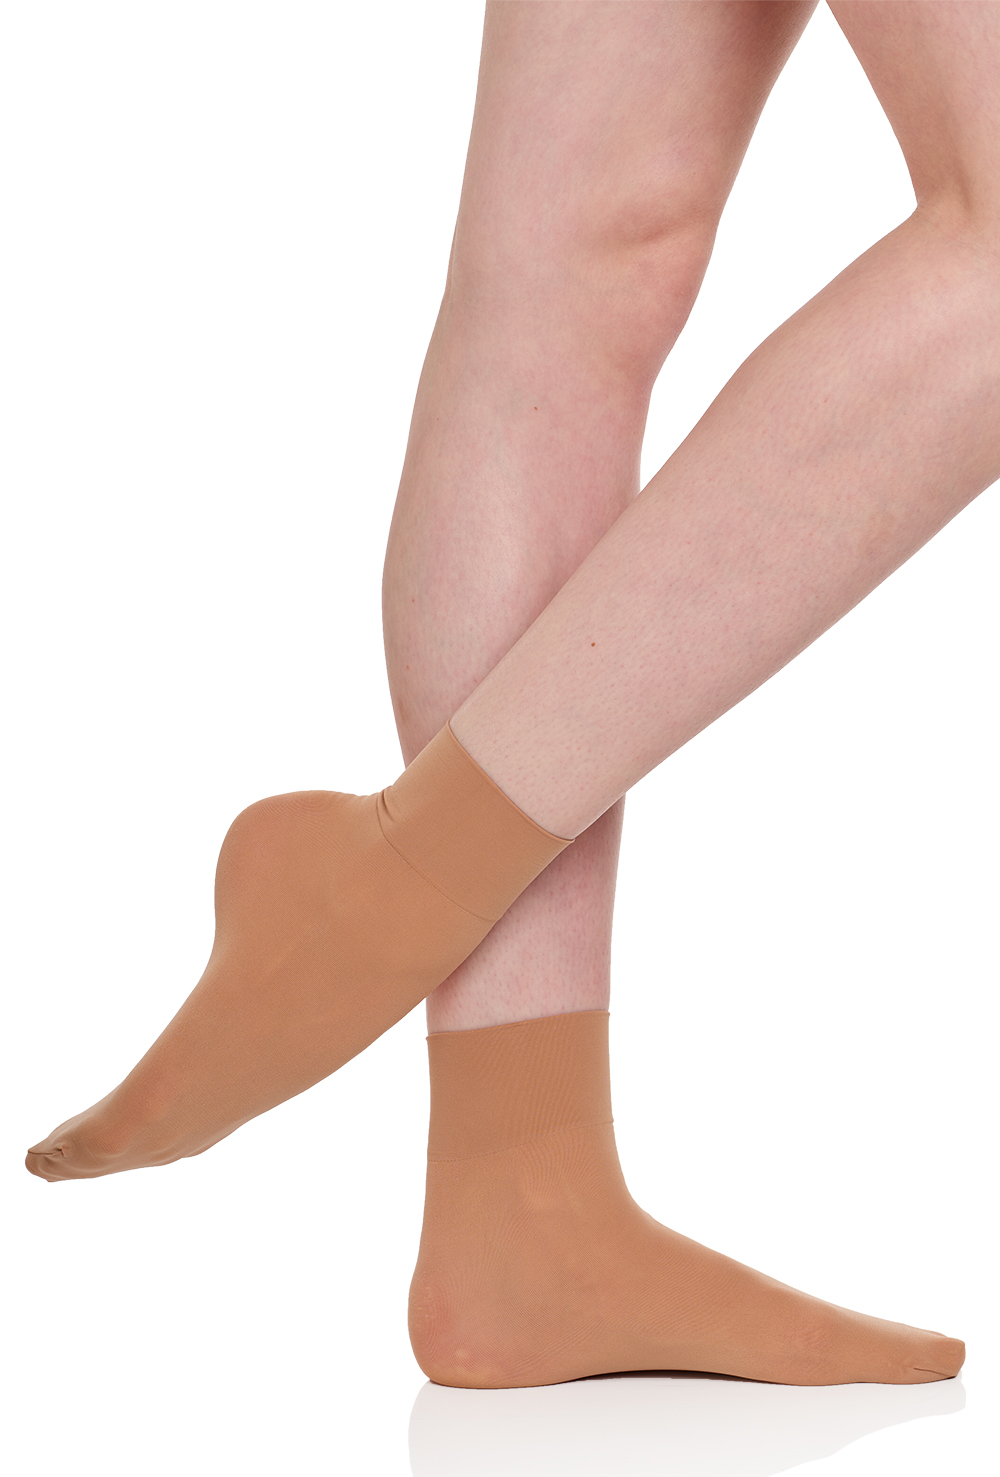 Ballet Socks for Girls Kids Thin Seamless Silk Socks Without Heel, Pack of 3